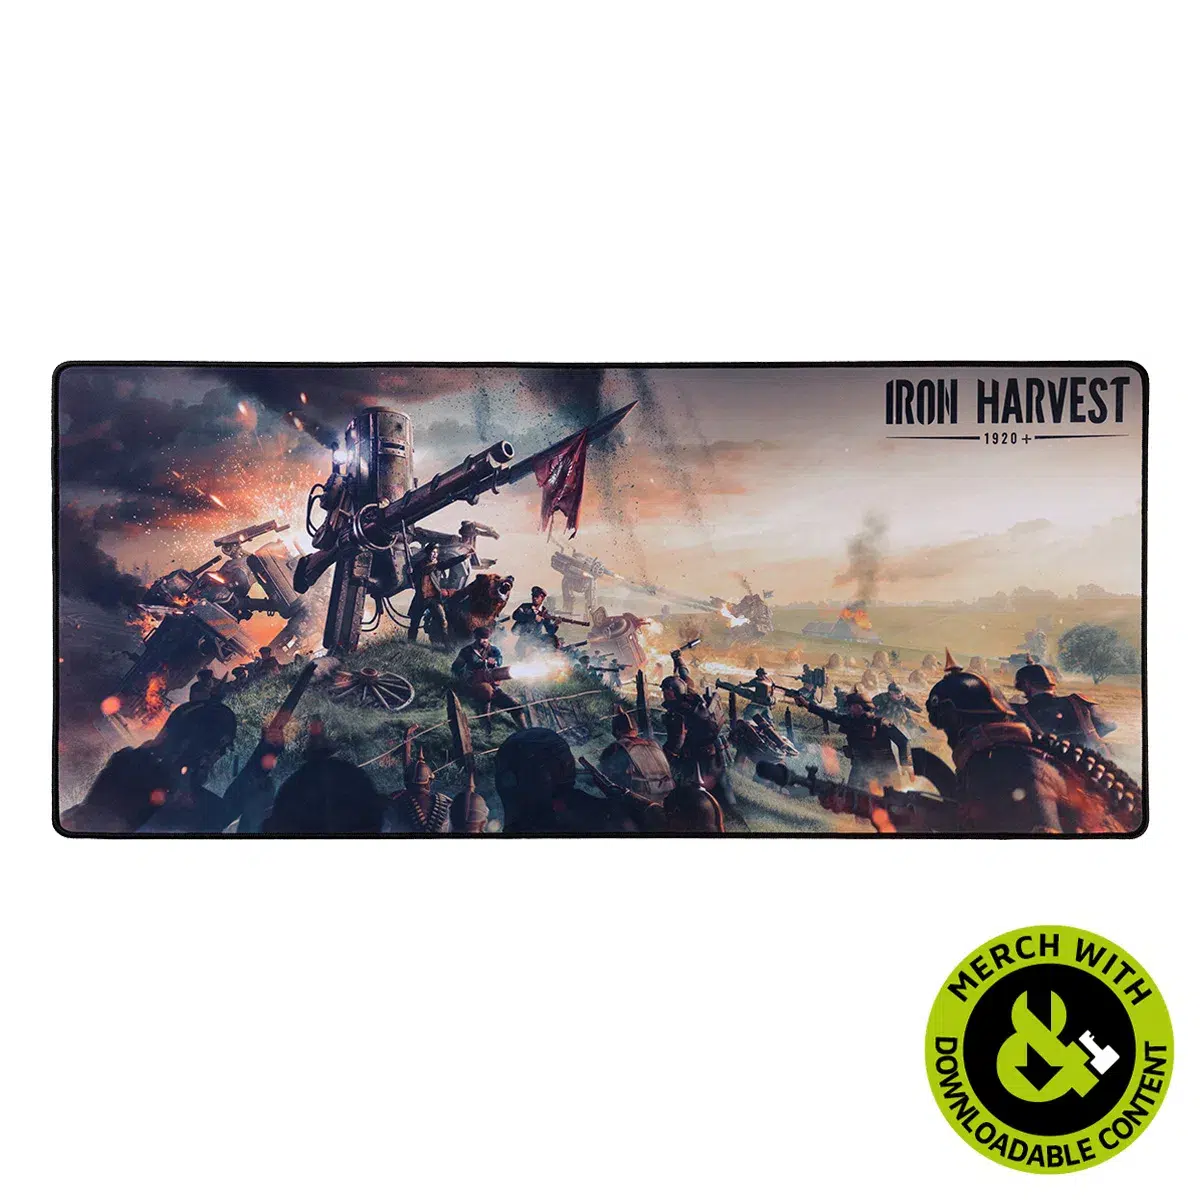 Iron Harvest Mousepad "Battlefield" m2